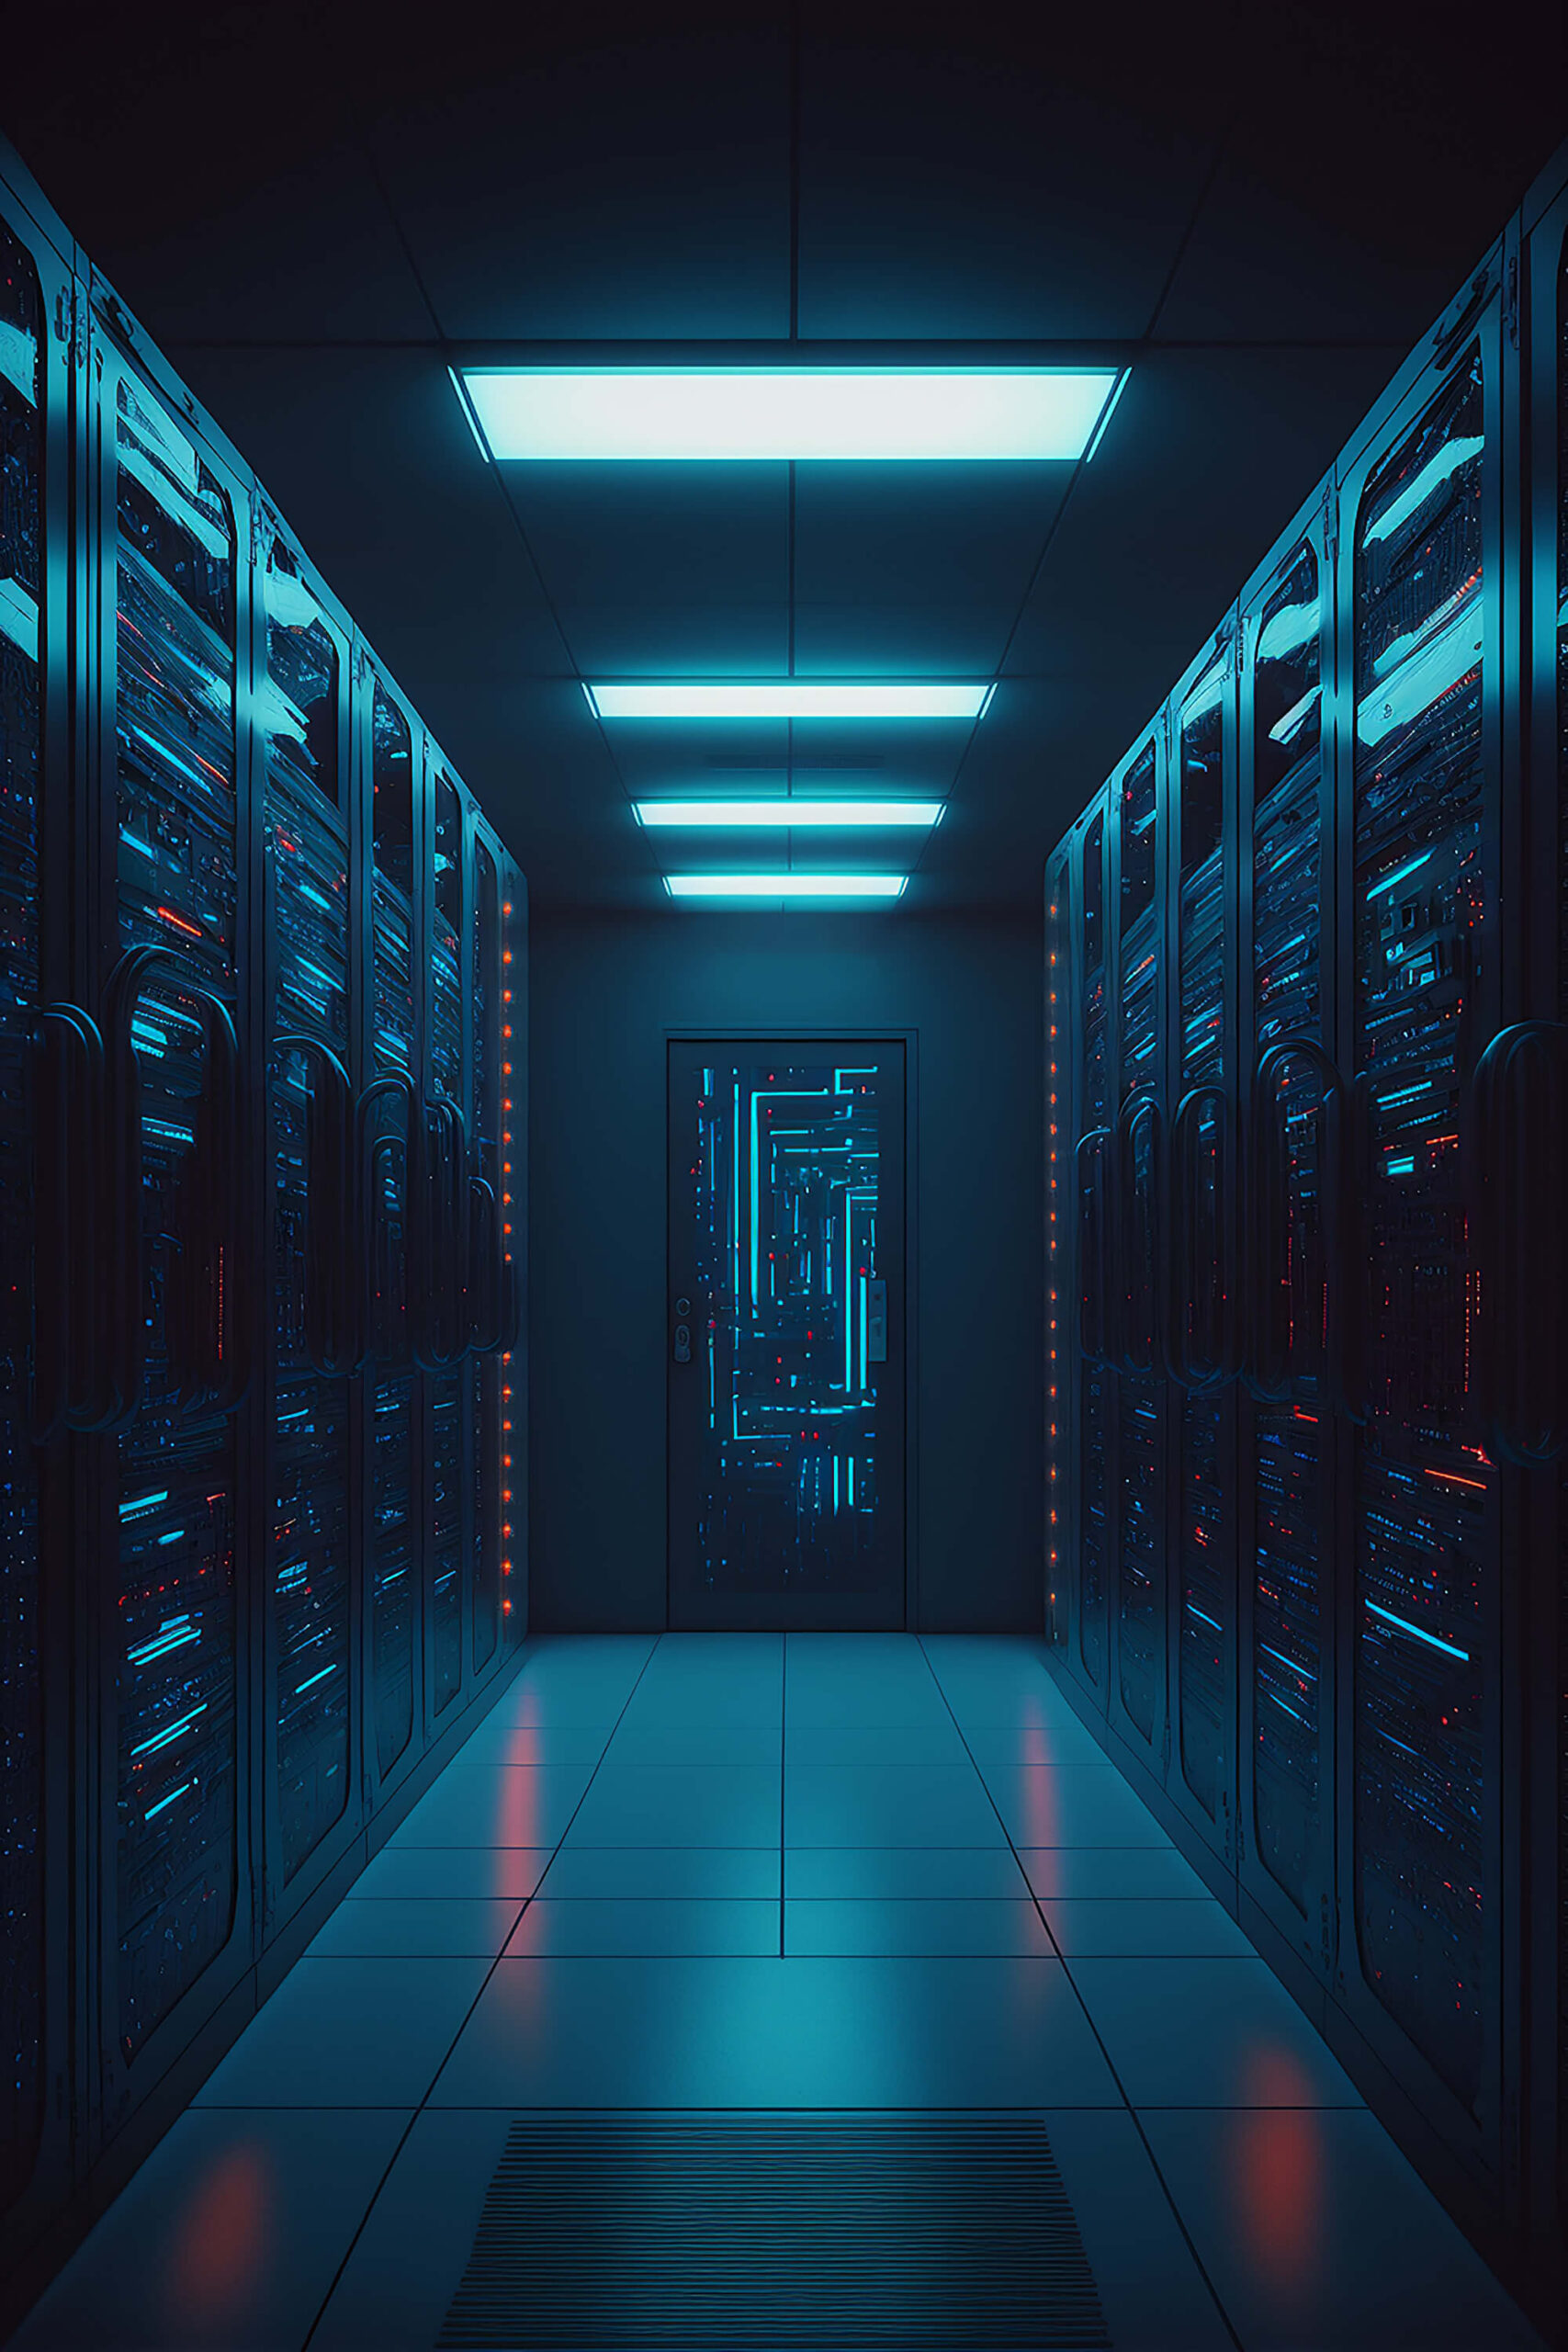 data-server-racks-hub-room-with-big-data-computer-center-blue-interior-hosting-storage-hardware